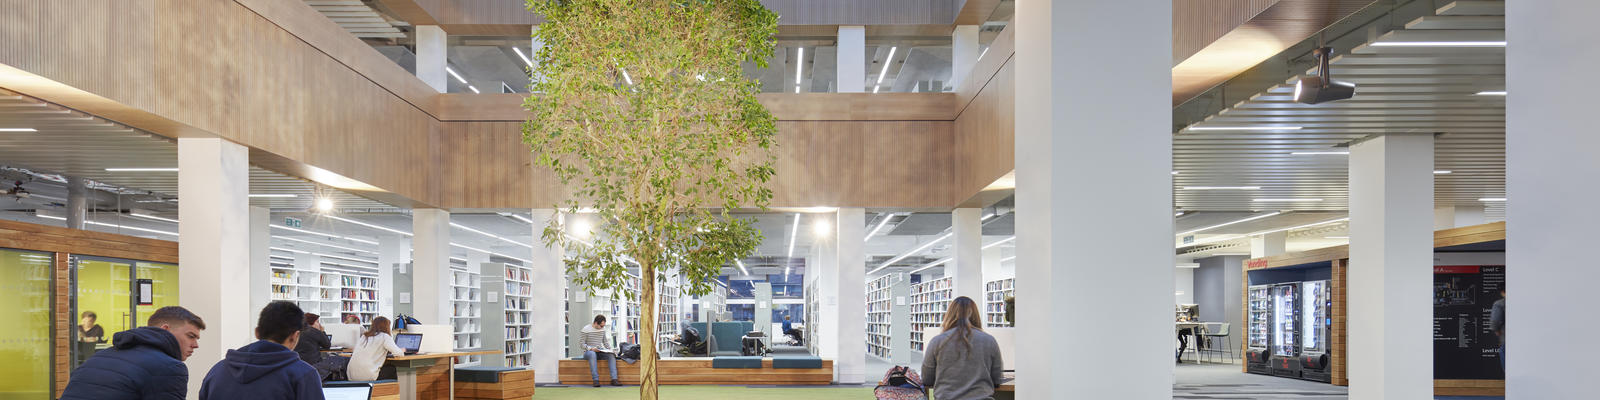 Interior of Lancaster University Library Ground floor